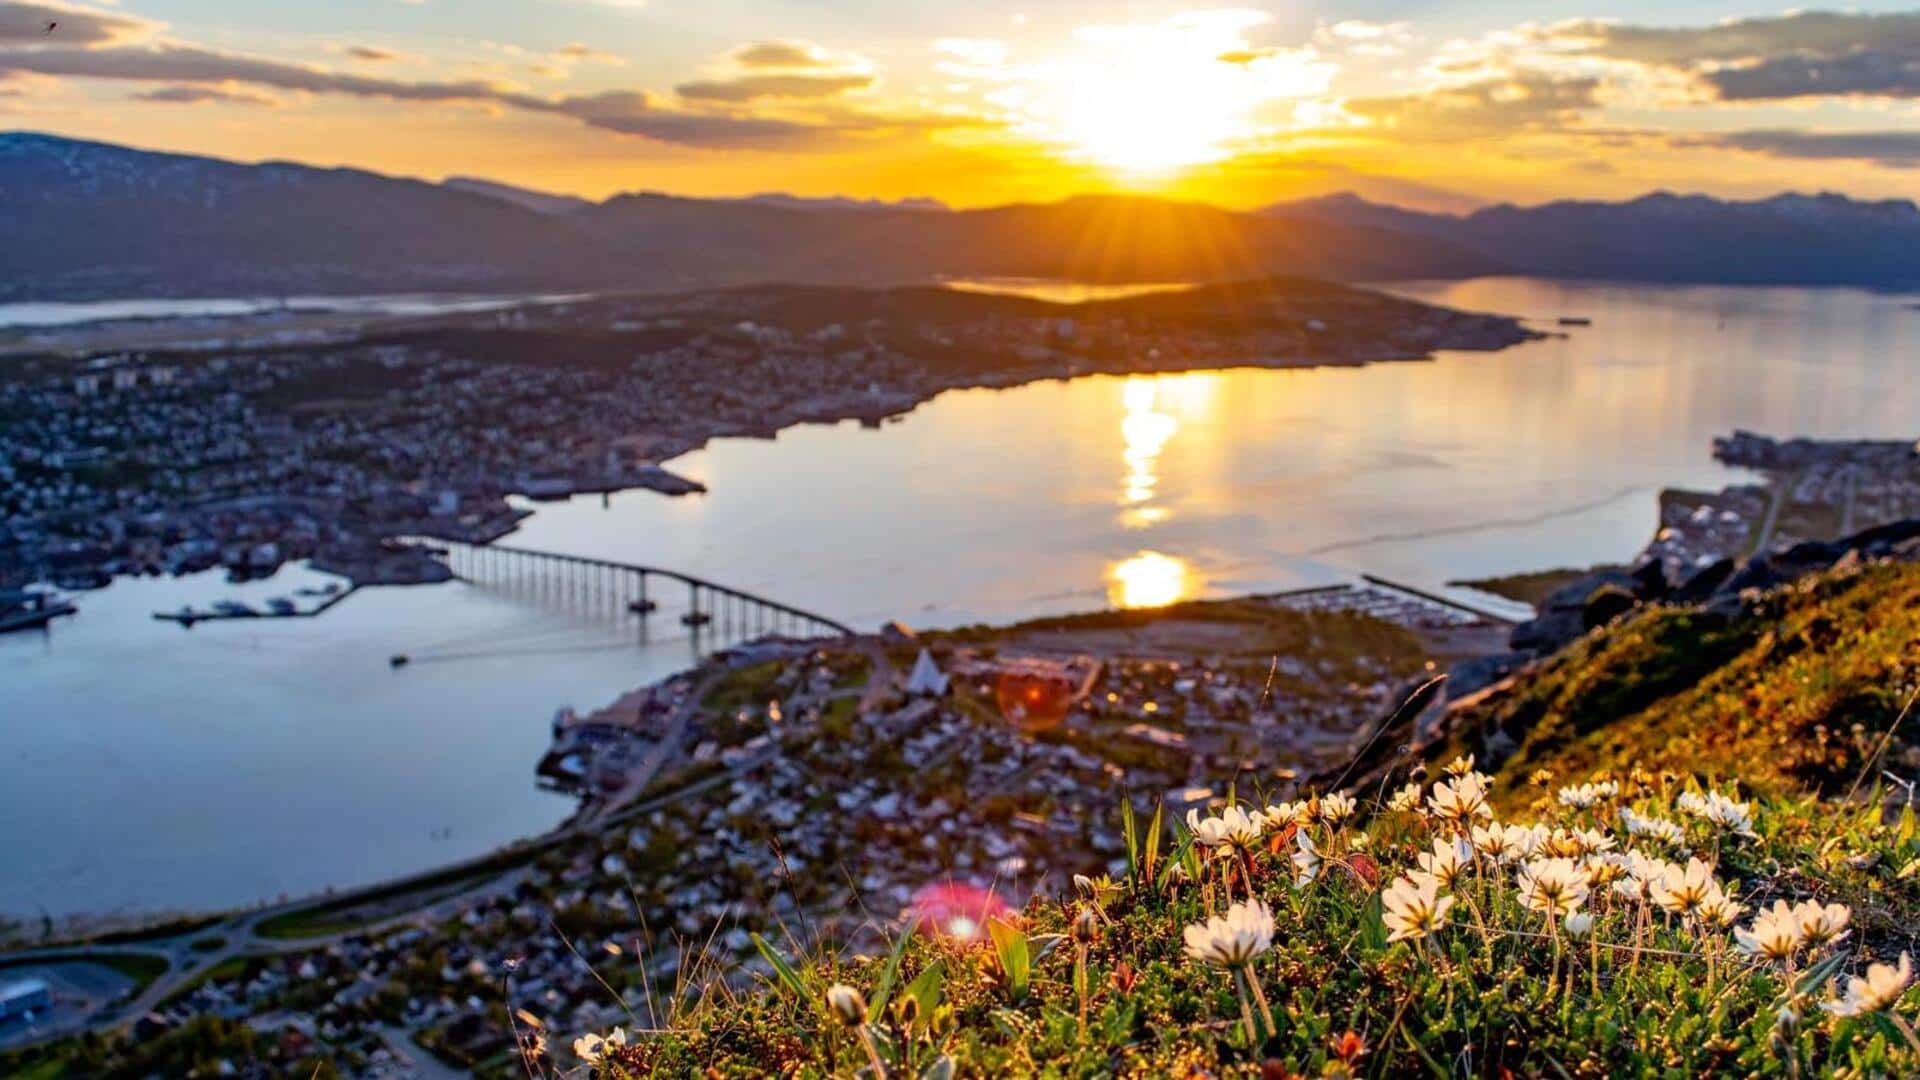 Norway's Midnight Sun Marathon is an attraction that attracts millions